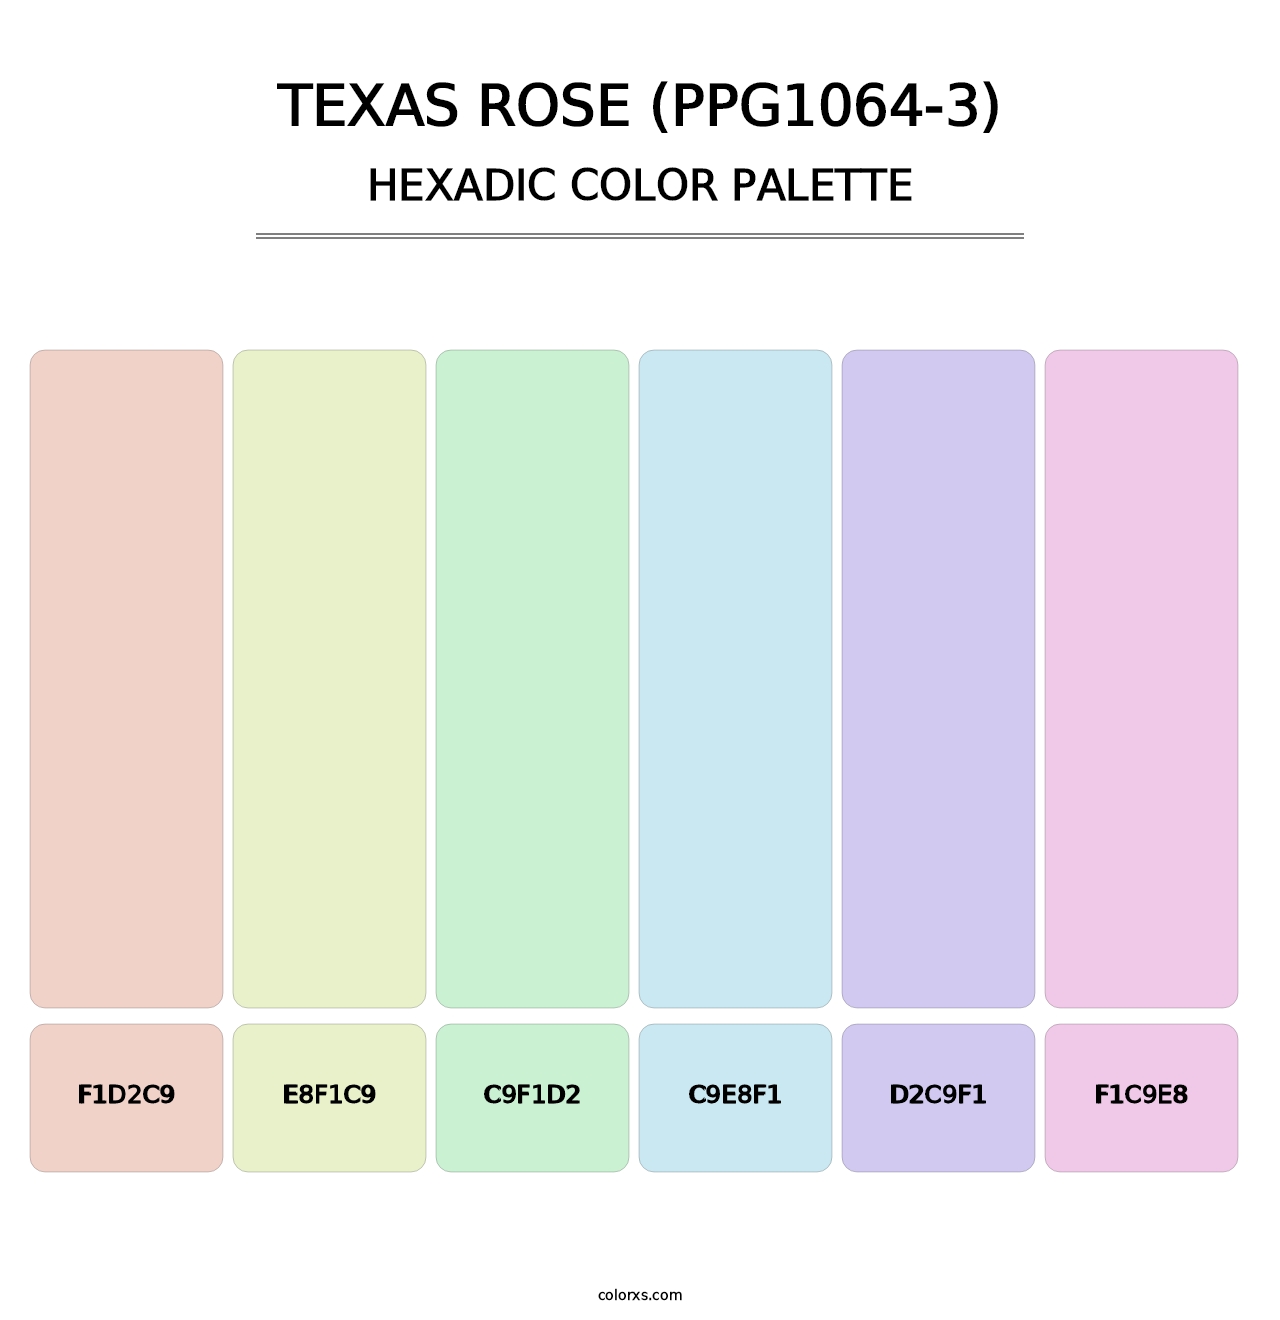 Texas Rose (PPG1064-3) - Hexadic Color Palette